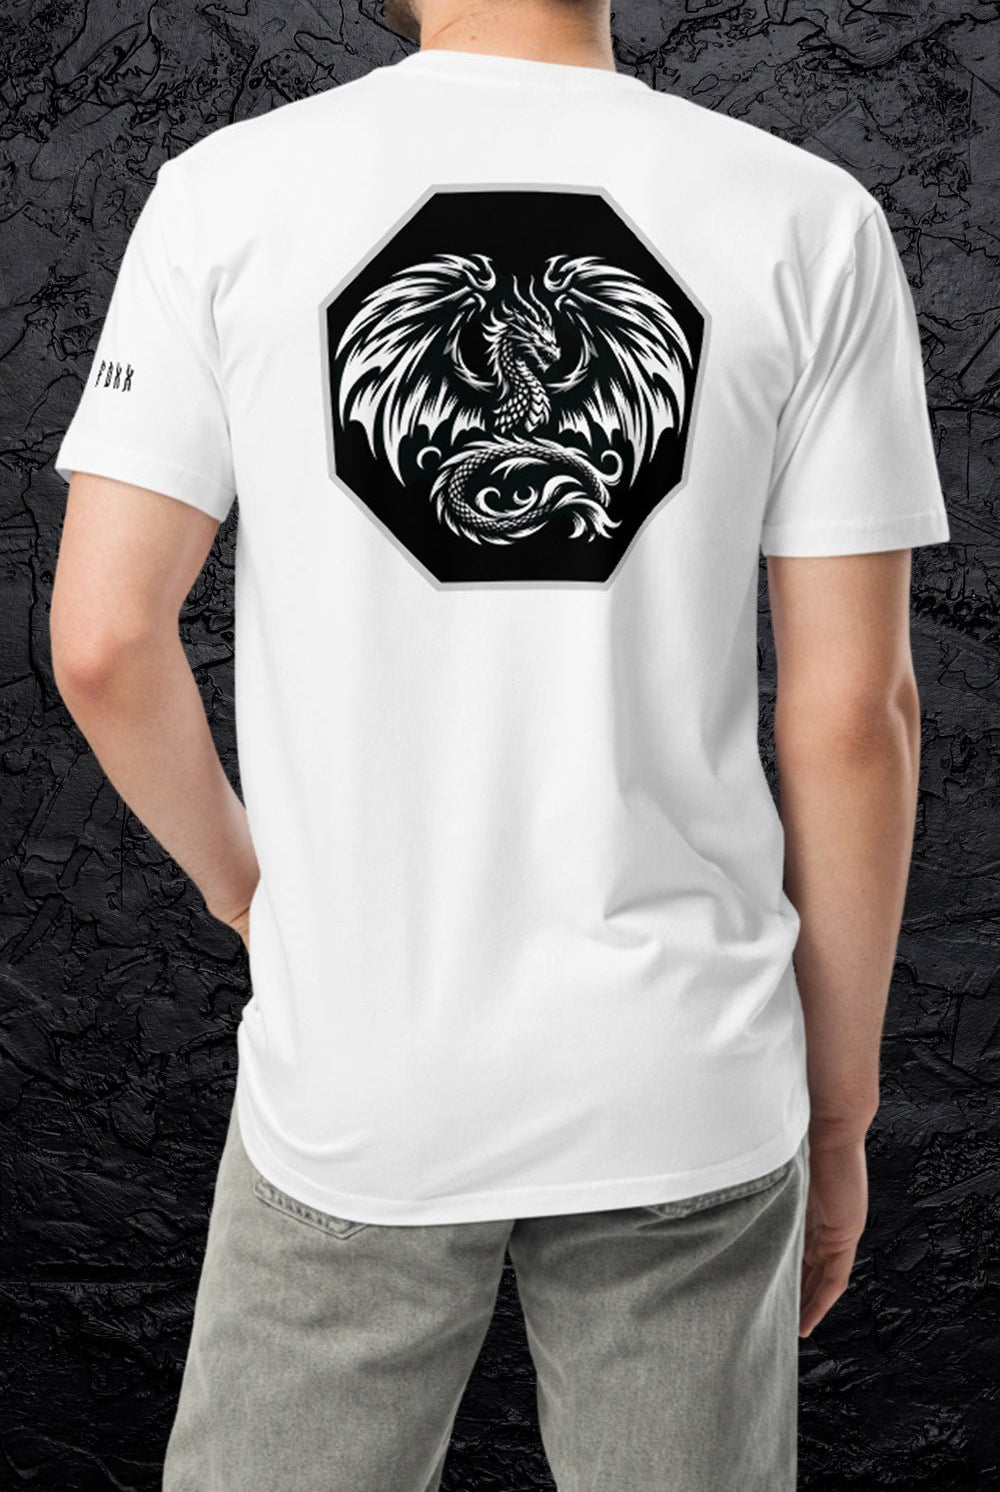 Drakonos - Men's White Premium T-shirt - Men's T-Shirts - DRAGON FOXX™ - Drakonos - Men's White Premium T-shirt - 9083179_18793 - S - White - 100% combed cotton - Dragon Foxx™ - Dragon Foxx™ Drakonos - Men's White Premium T-shirt - Dragon Foxx™ Men's Graphic T-shirt